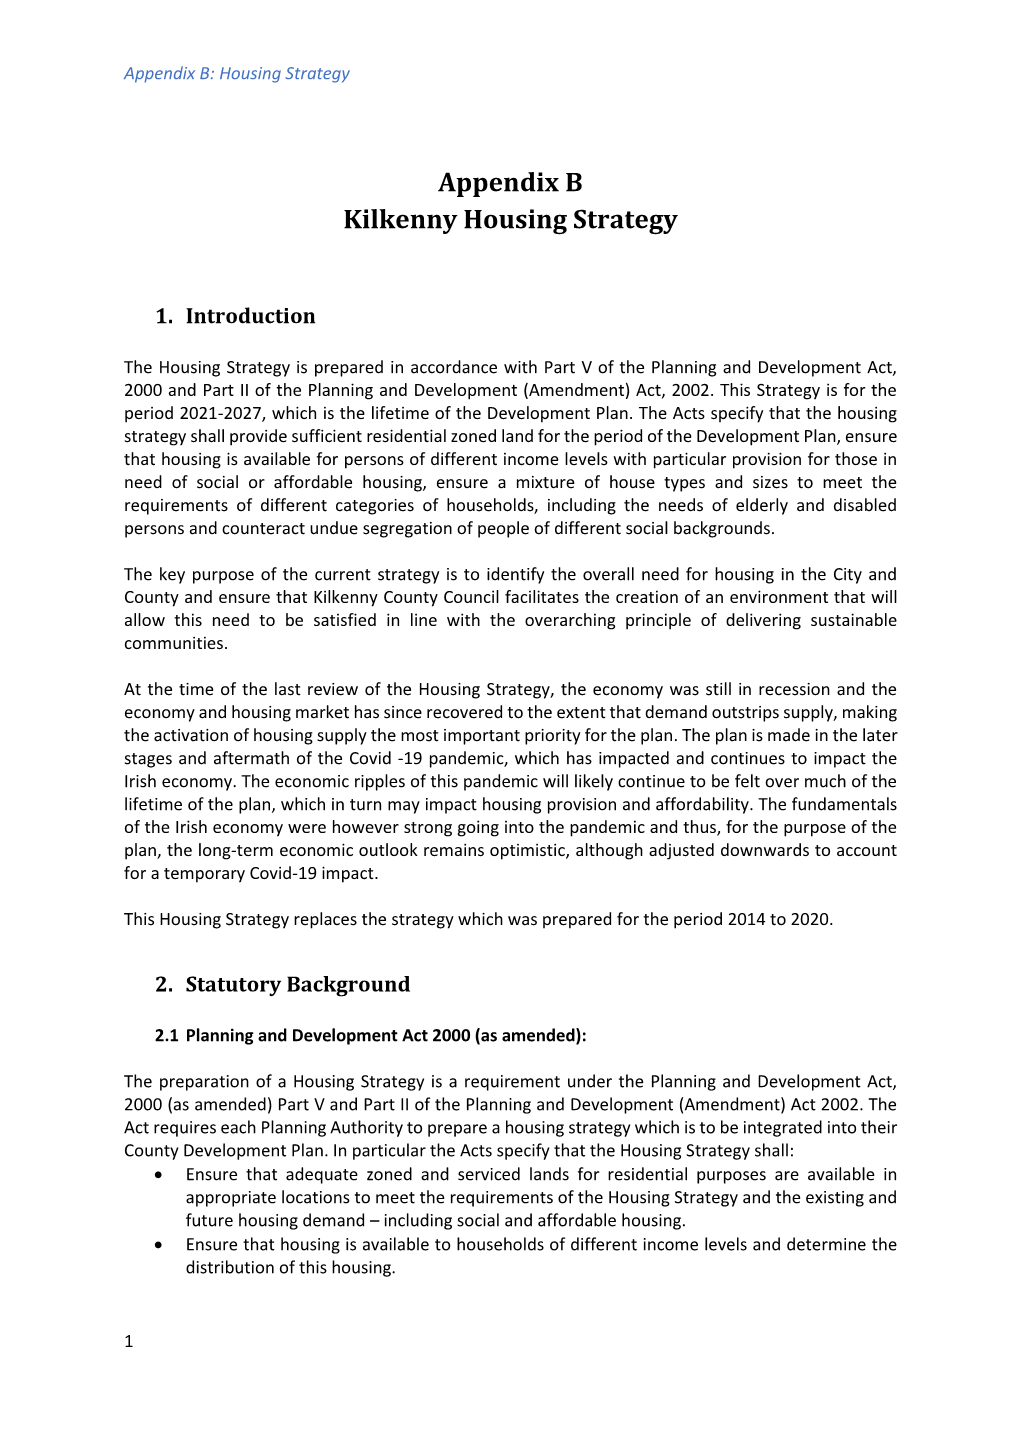 Appendix B Kilkenny Housing Strategy